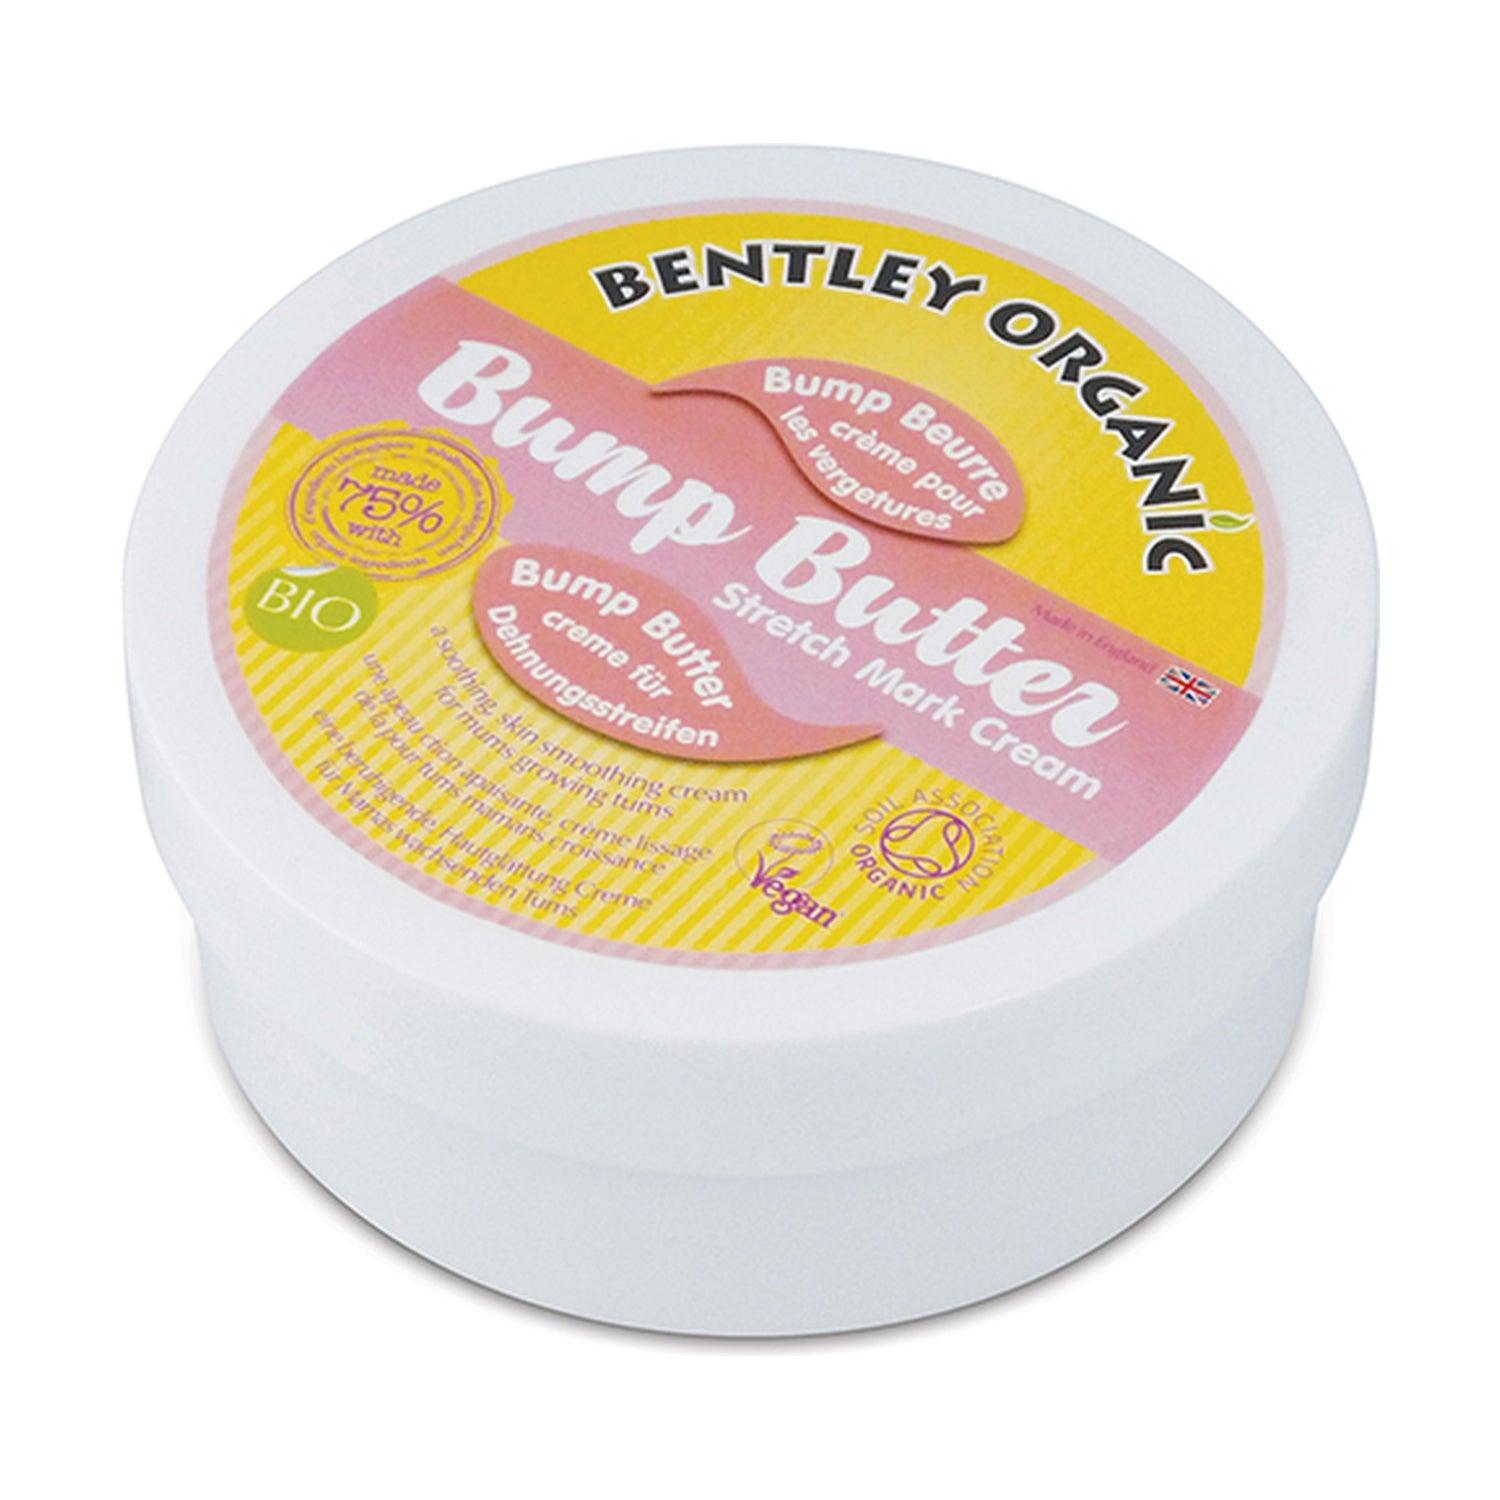 Bentley Organic: organic stretch mark cream for pregnant women